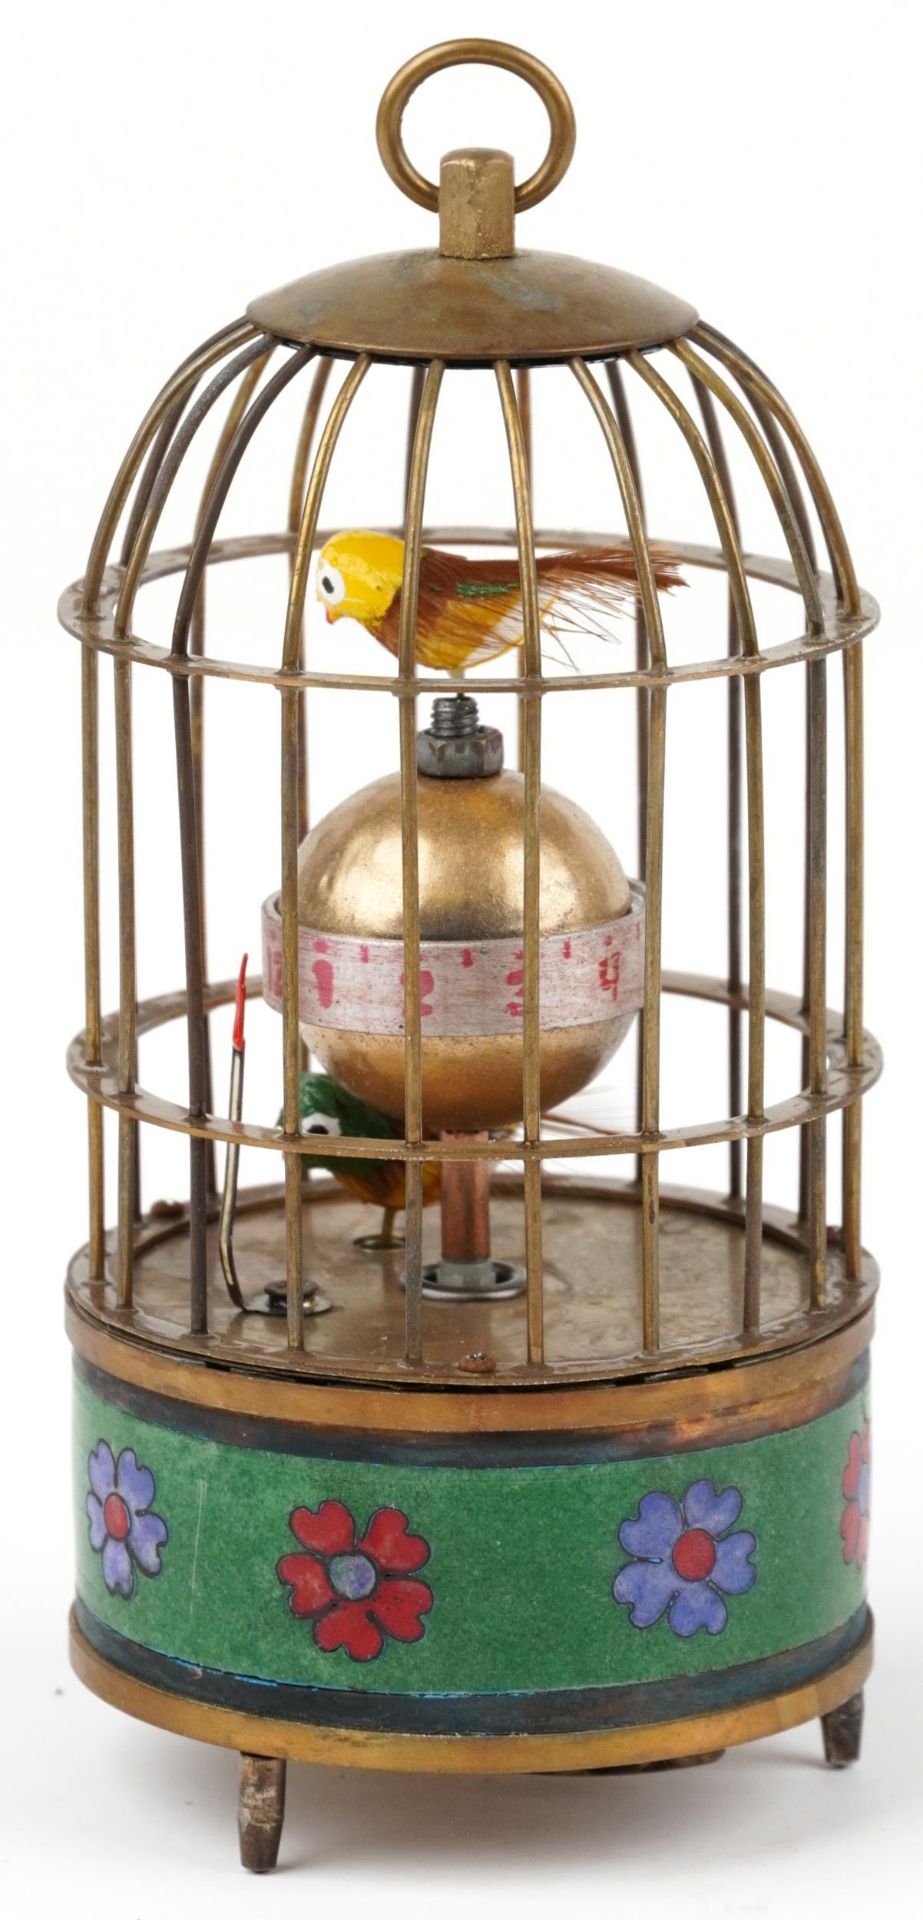 Clockwork automaton birdcage alarm clock with cloisonne band, 15.5cm high